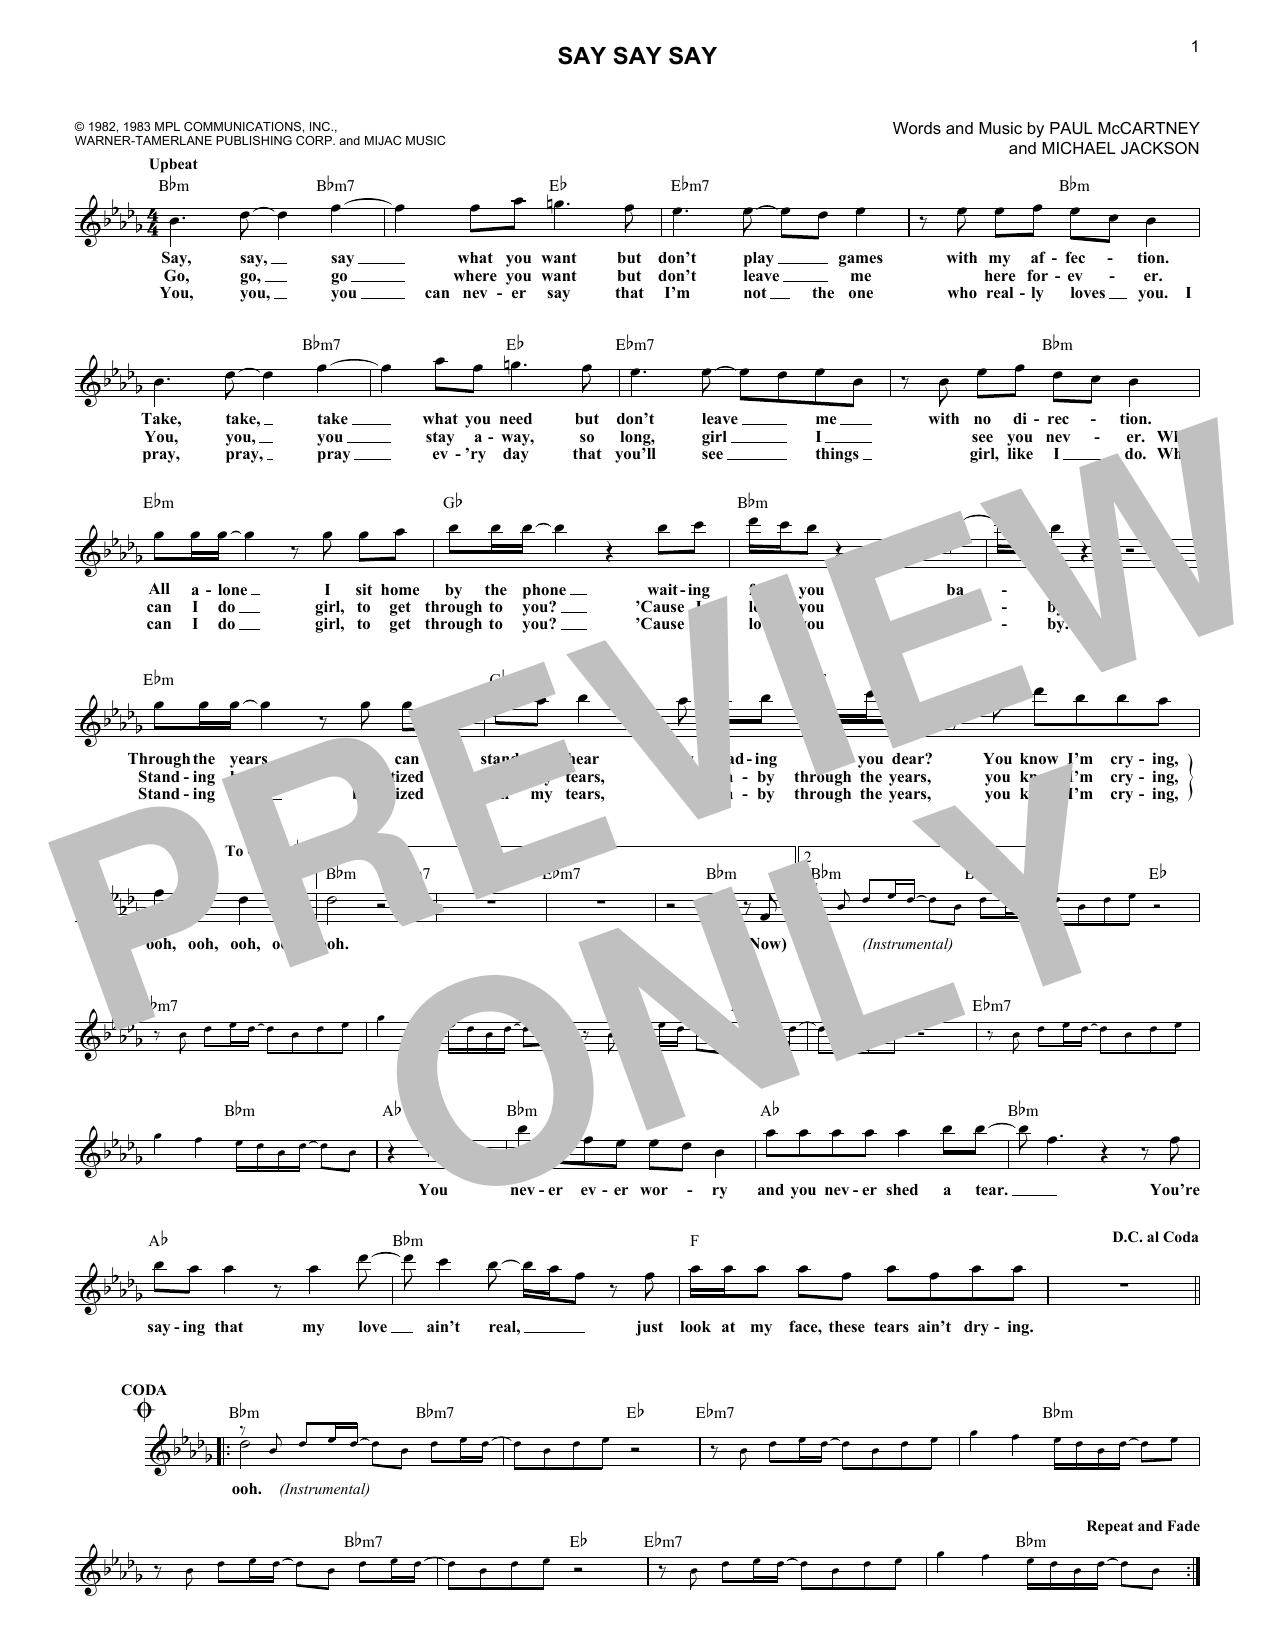 Paul McCartney & Michael Jackson Say Say Say Sheet Music Notes & Chords for Melody Line, Lyrics & Chords - Download or Print PDF